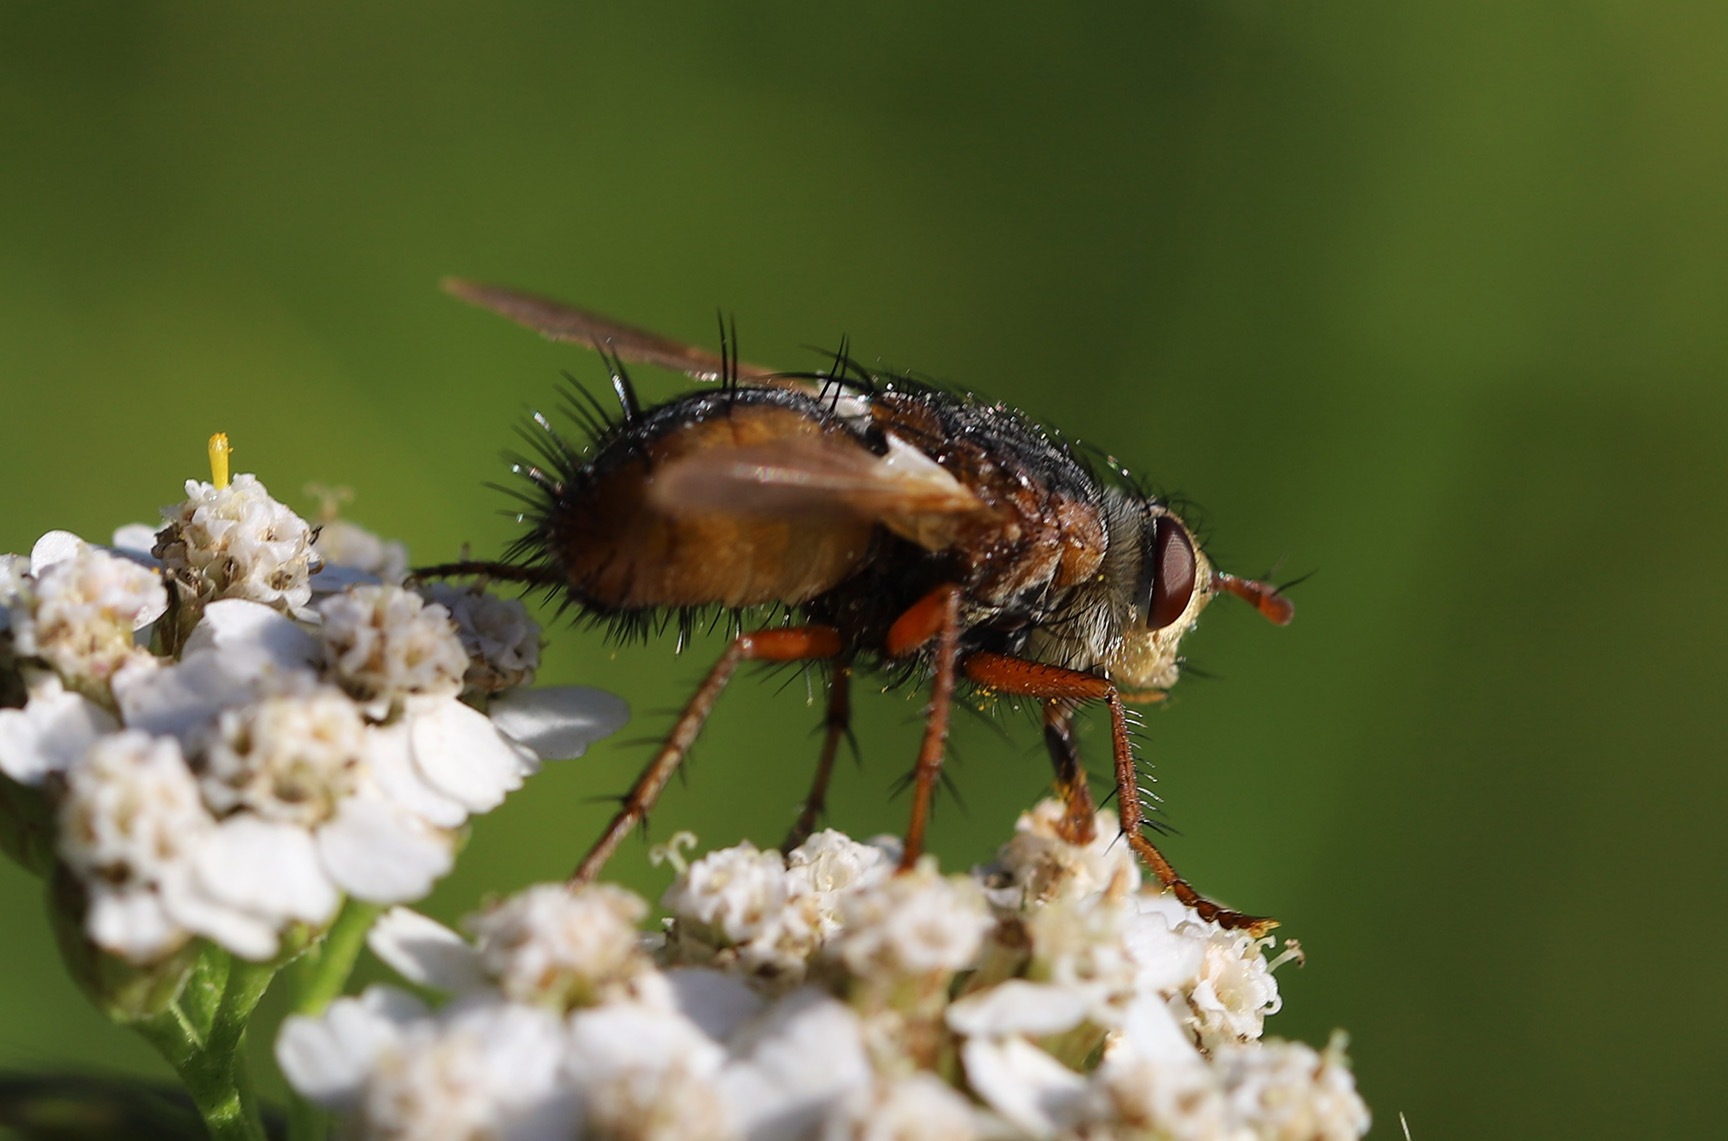 The fly Tachina fera. Its larvae are parasitoids of moth caterpillars